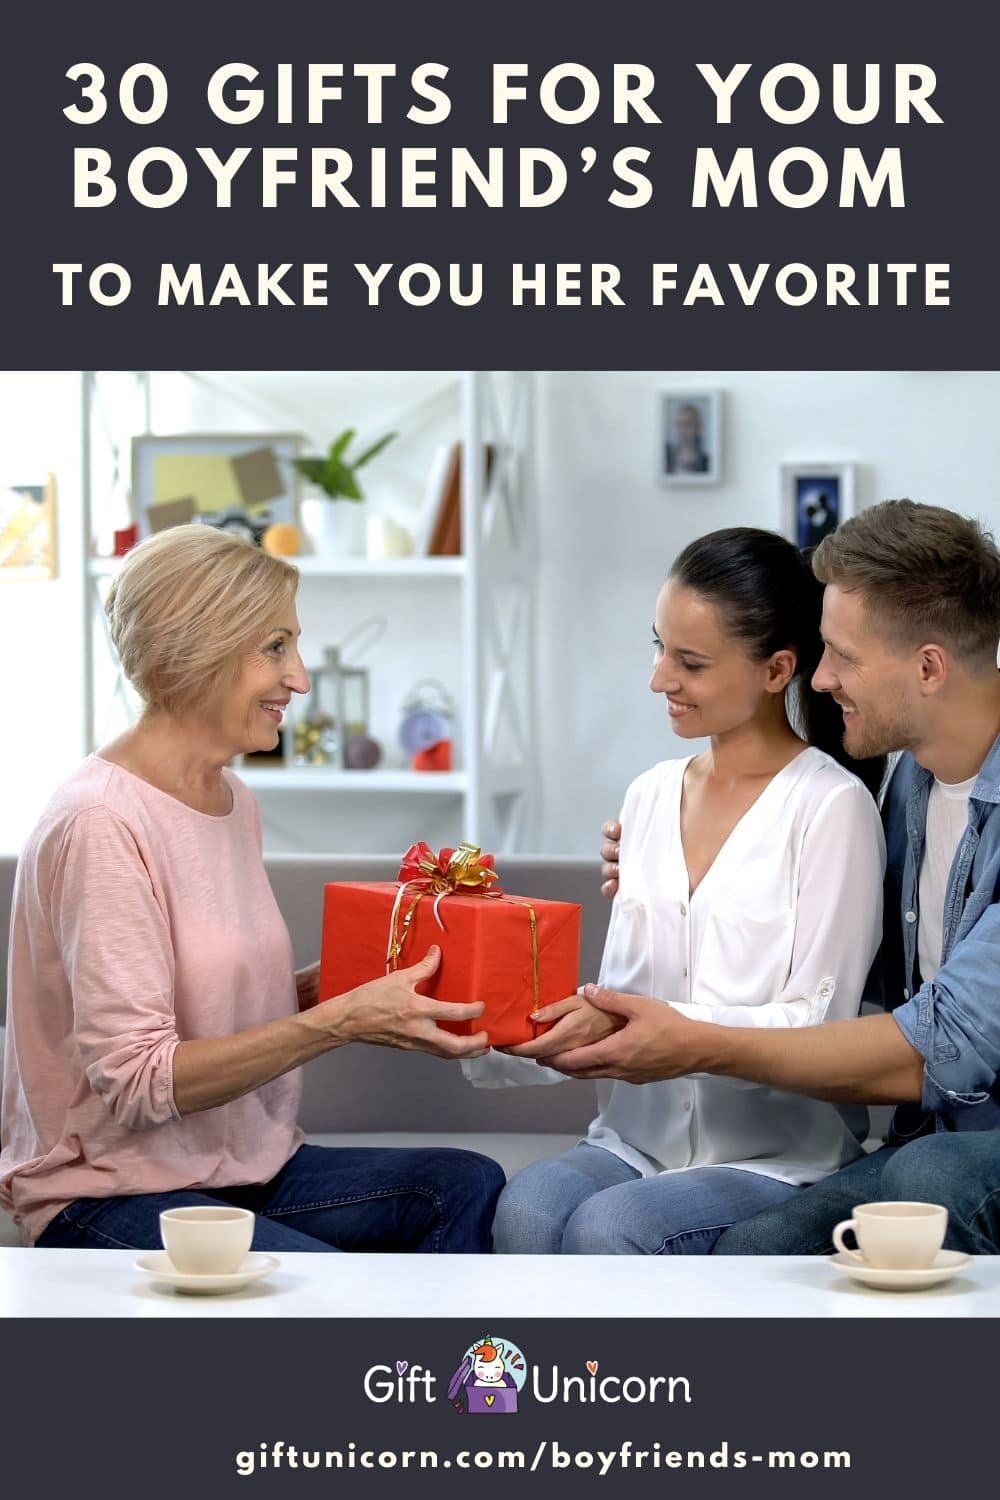 30 gifts for boyfriend's mom